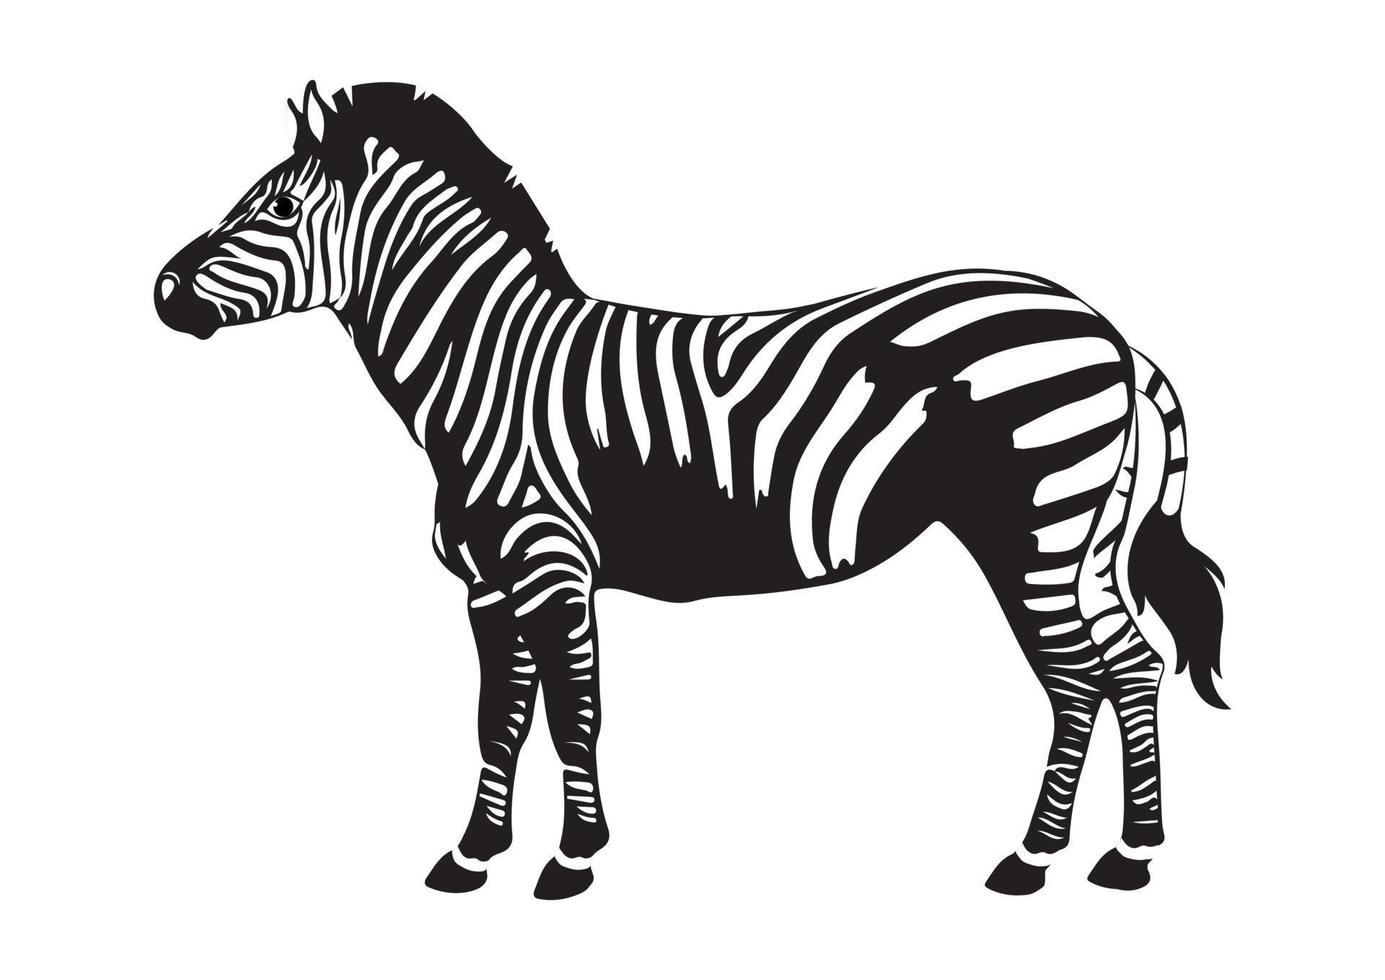 zebra preto e branco em estilo simples, isolado no fundo branco vetor